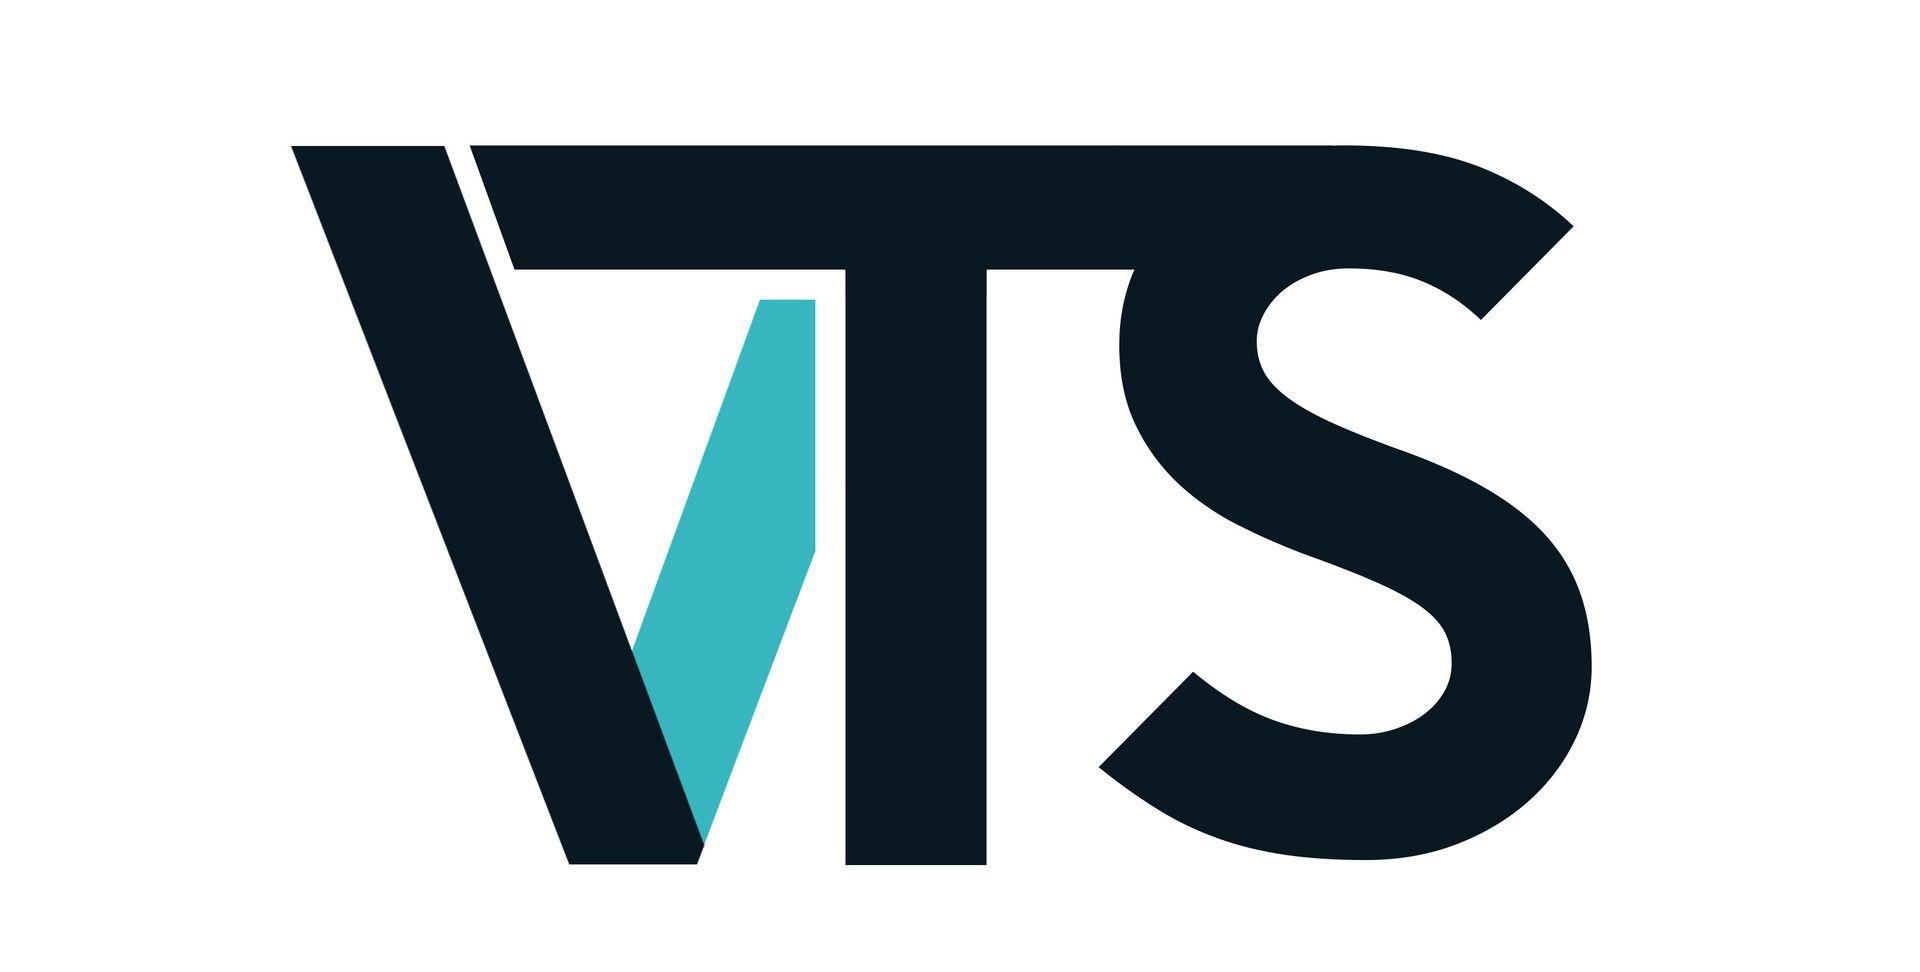 VTS Logo - Jamie Callow - Commissioned Logo Designs